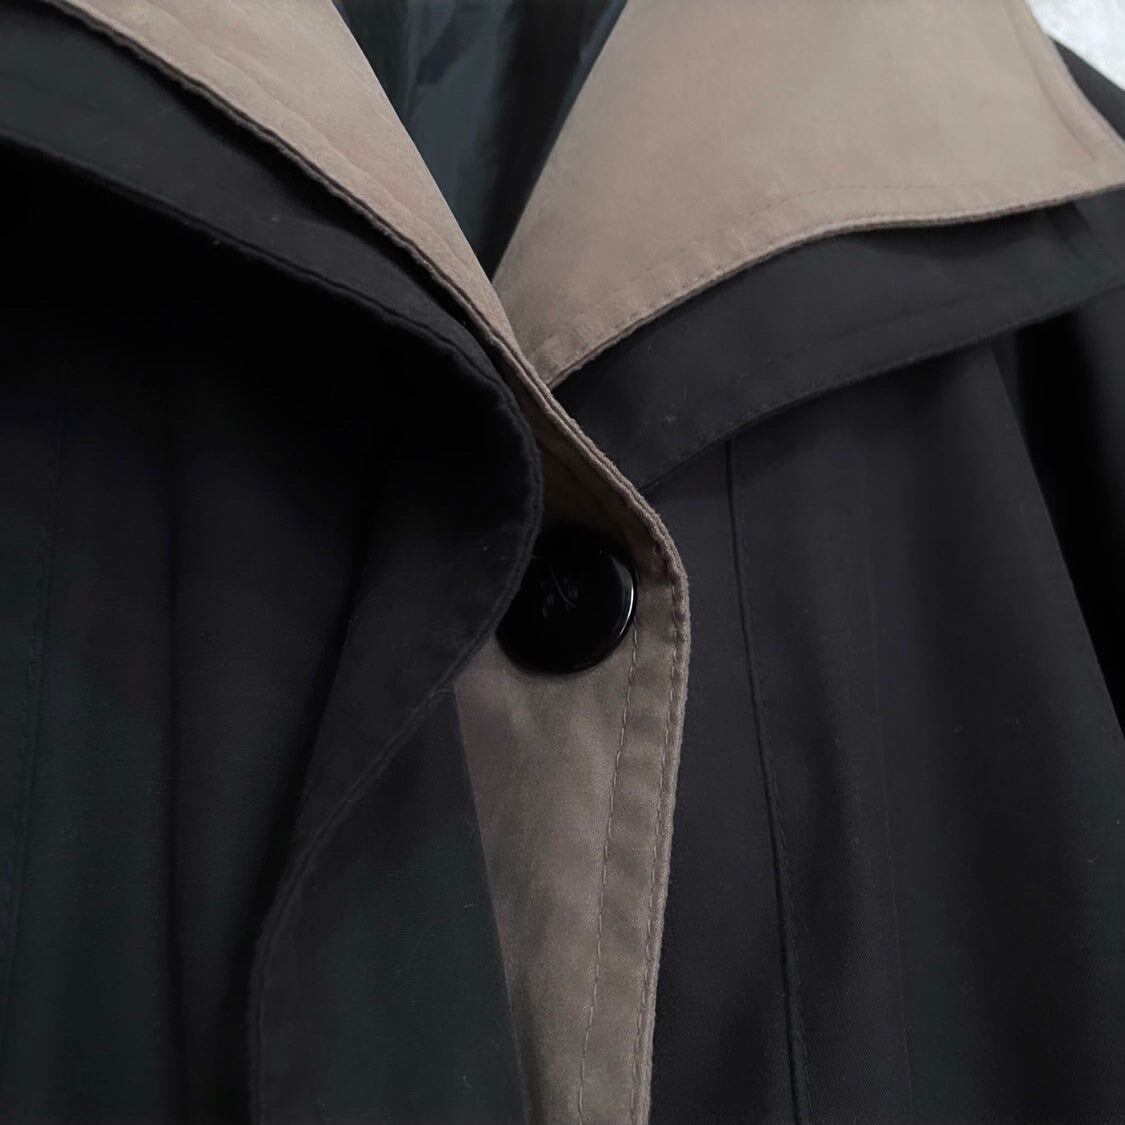 dark brown double collar coatステンカラーコート